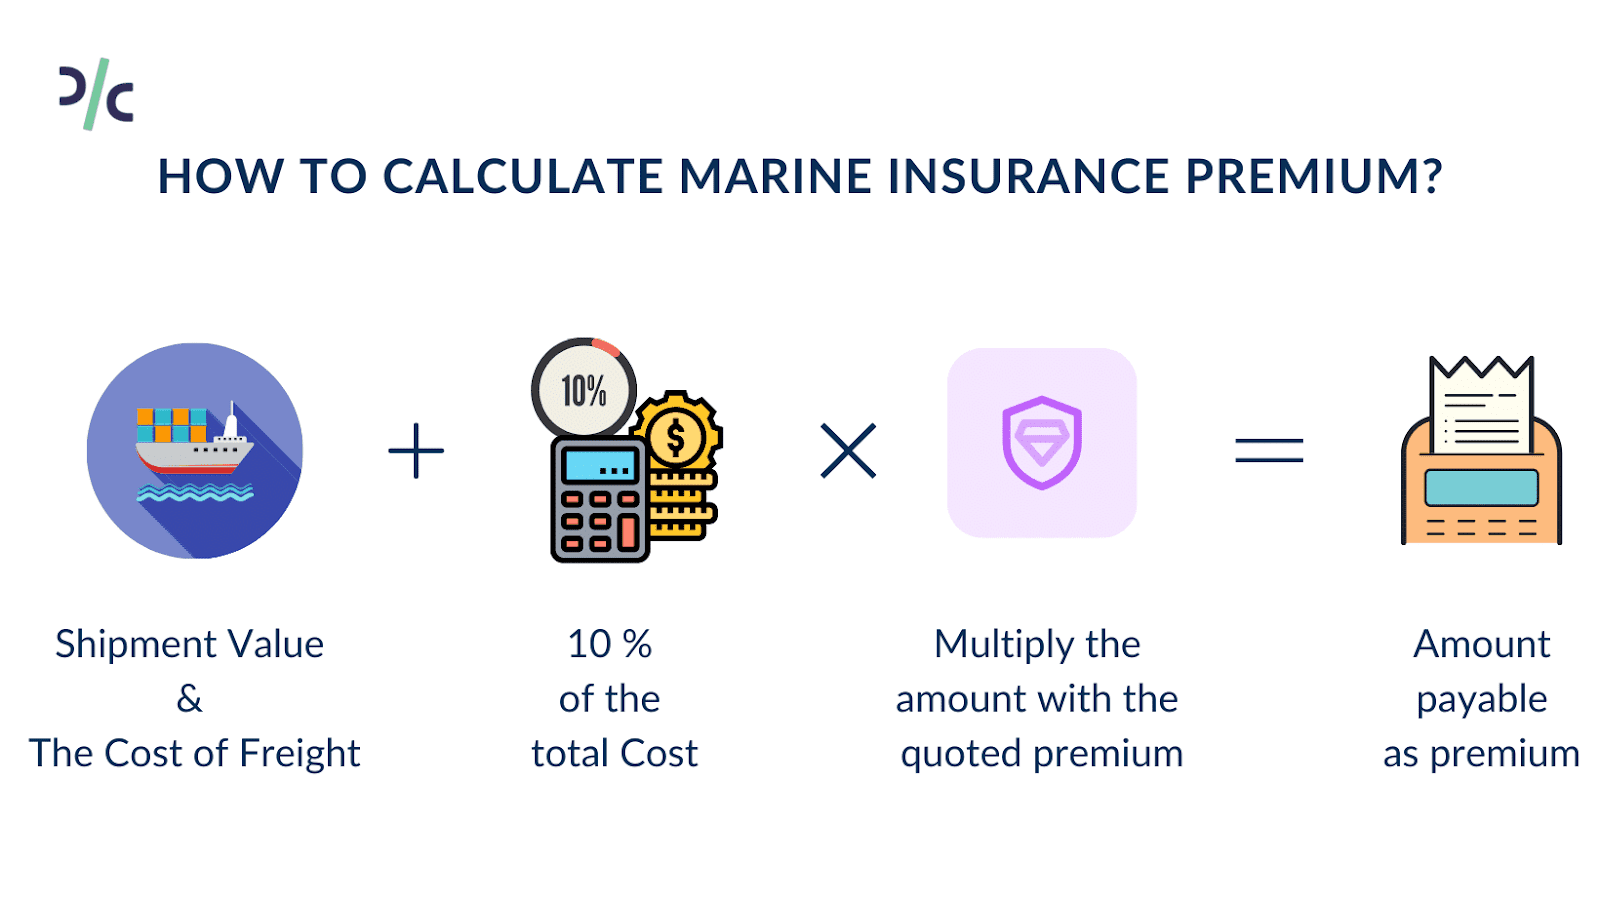 How to calculate marine insurance premium